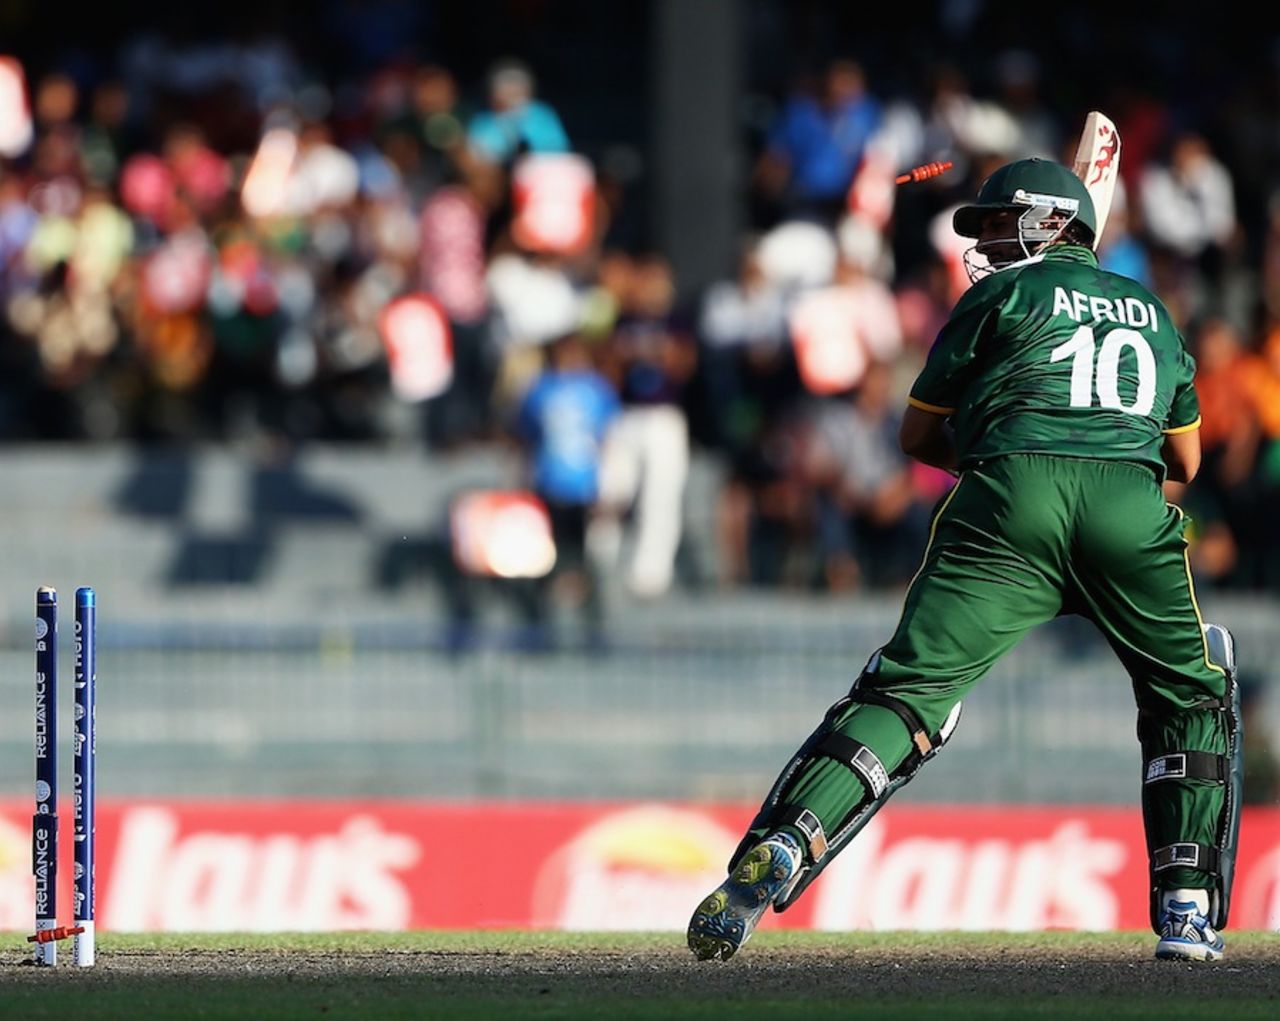 Shahid Afridi was bowled by Mitchell Starc, Australia v Pakistan, Super Eights, World Twenty20 2012, Colombo, October 2, 2012